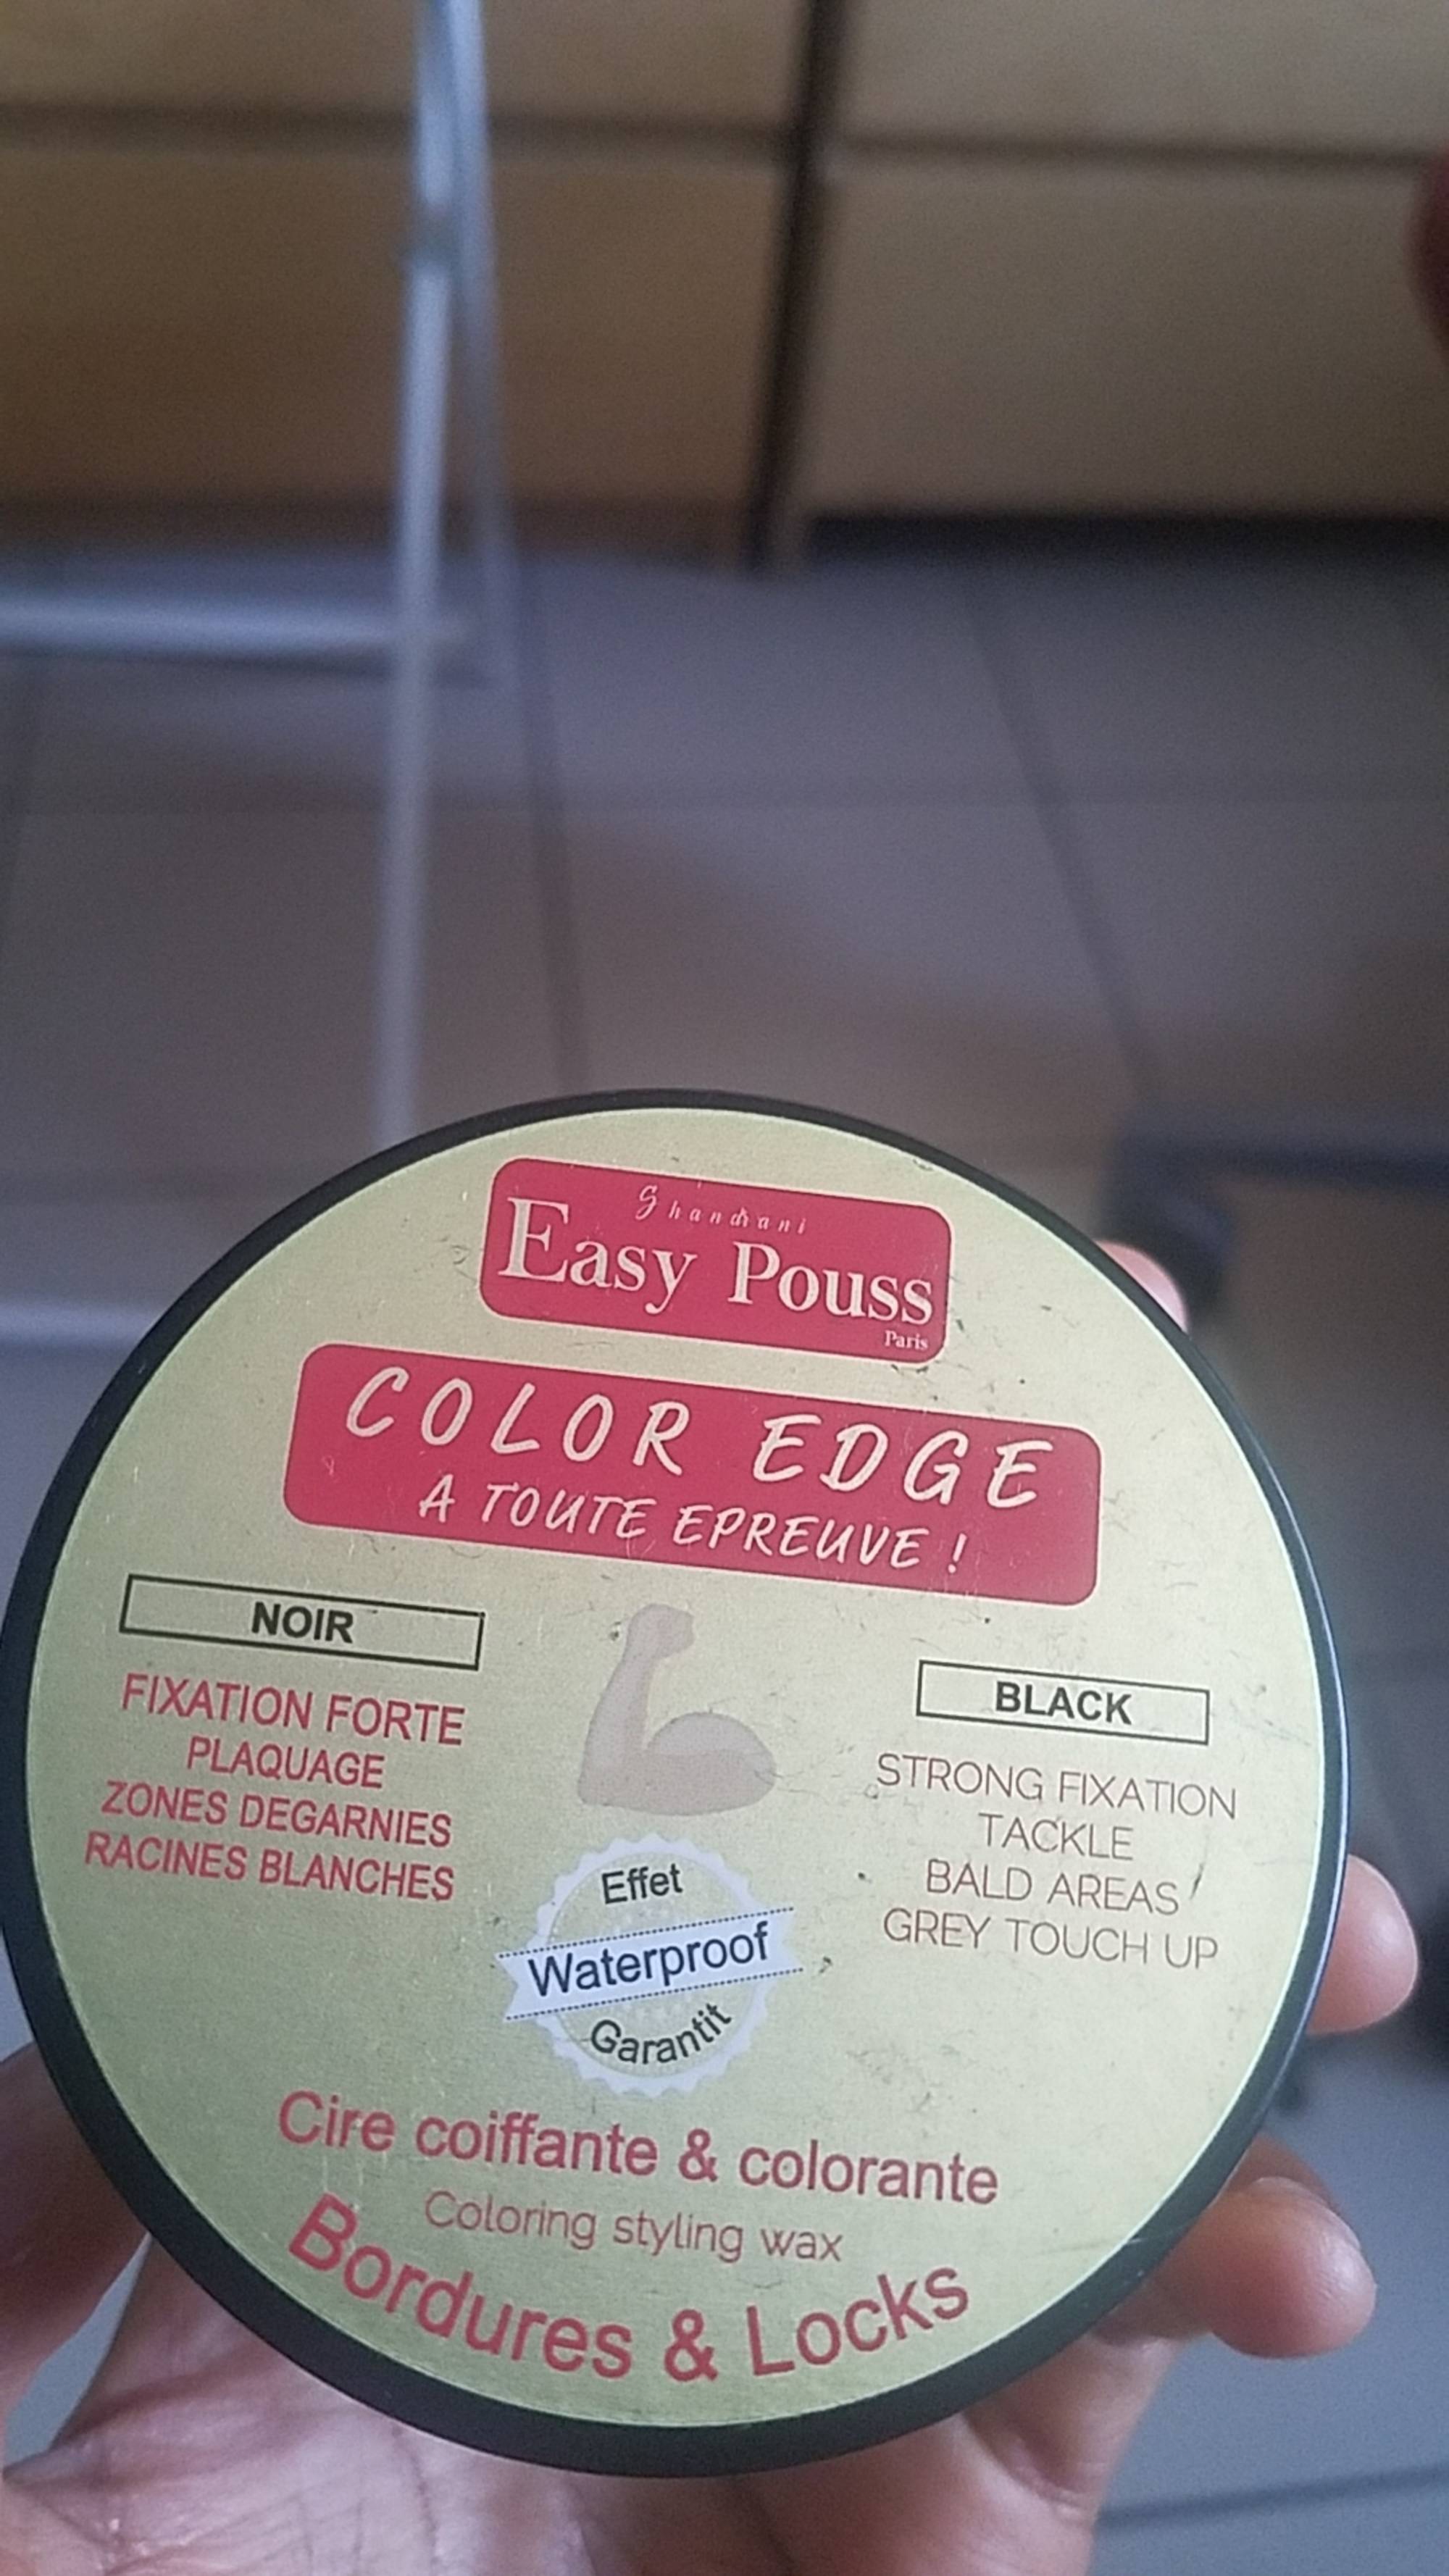 EASY POUSS - Color edge - Cire coiffante & colorante